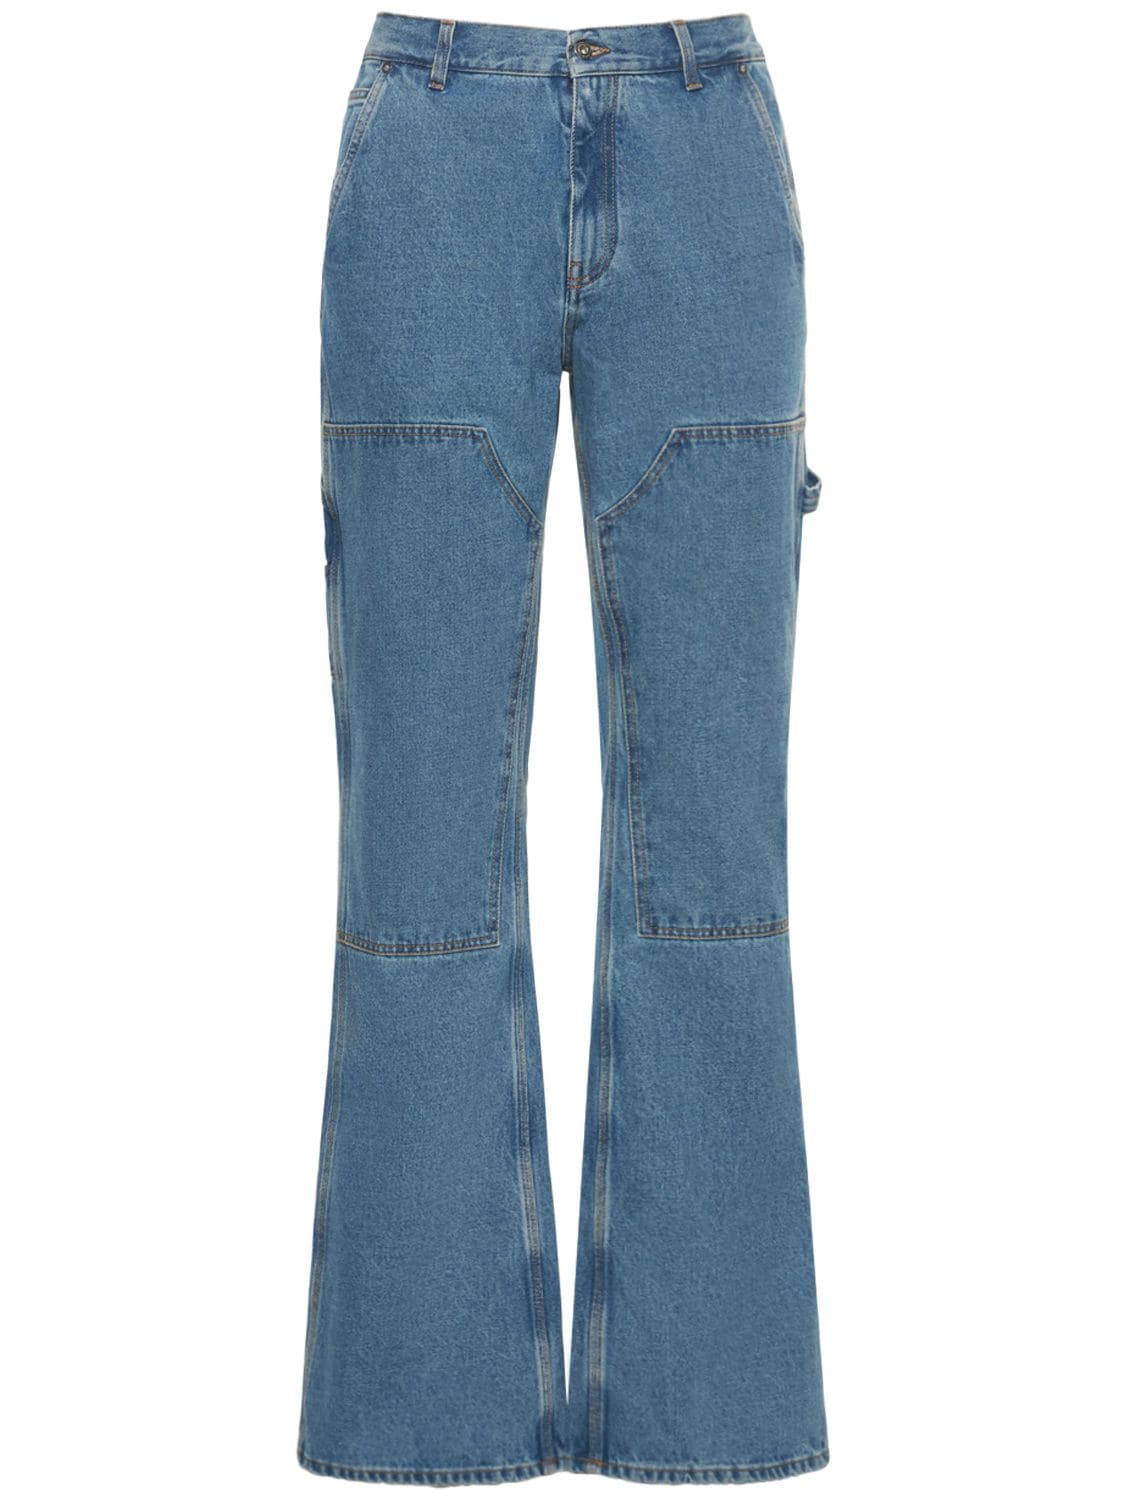 OFF-WHITE Carpenter Cotton Denim Jeans